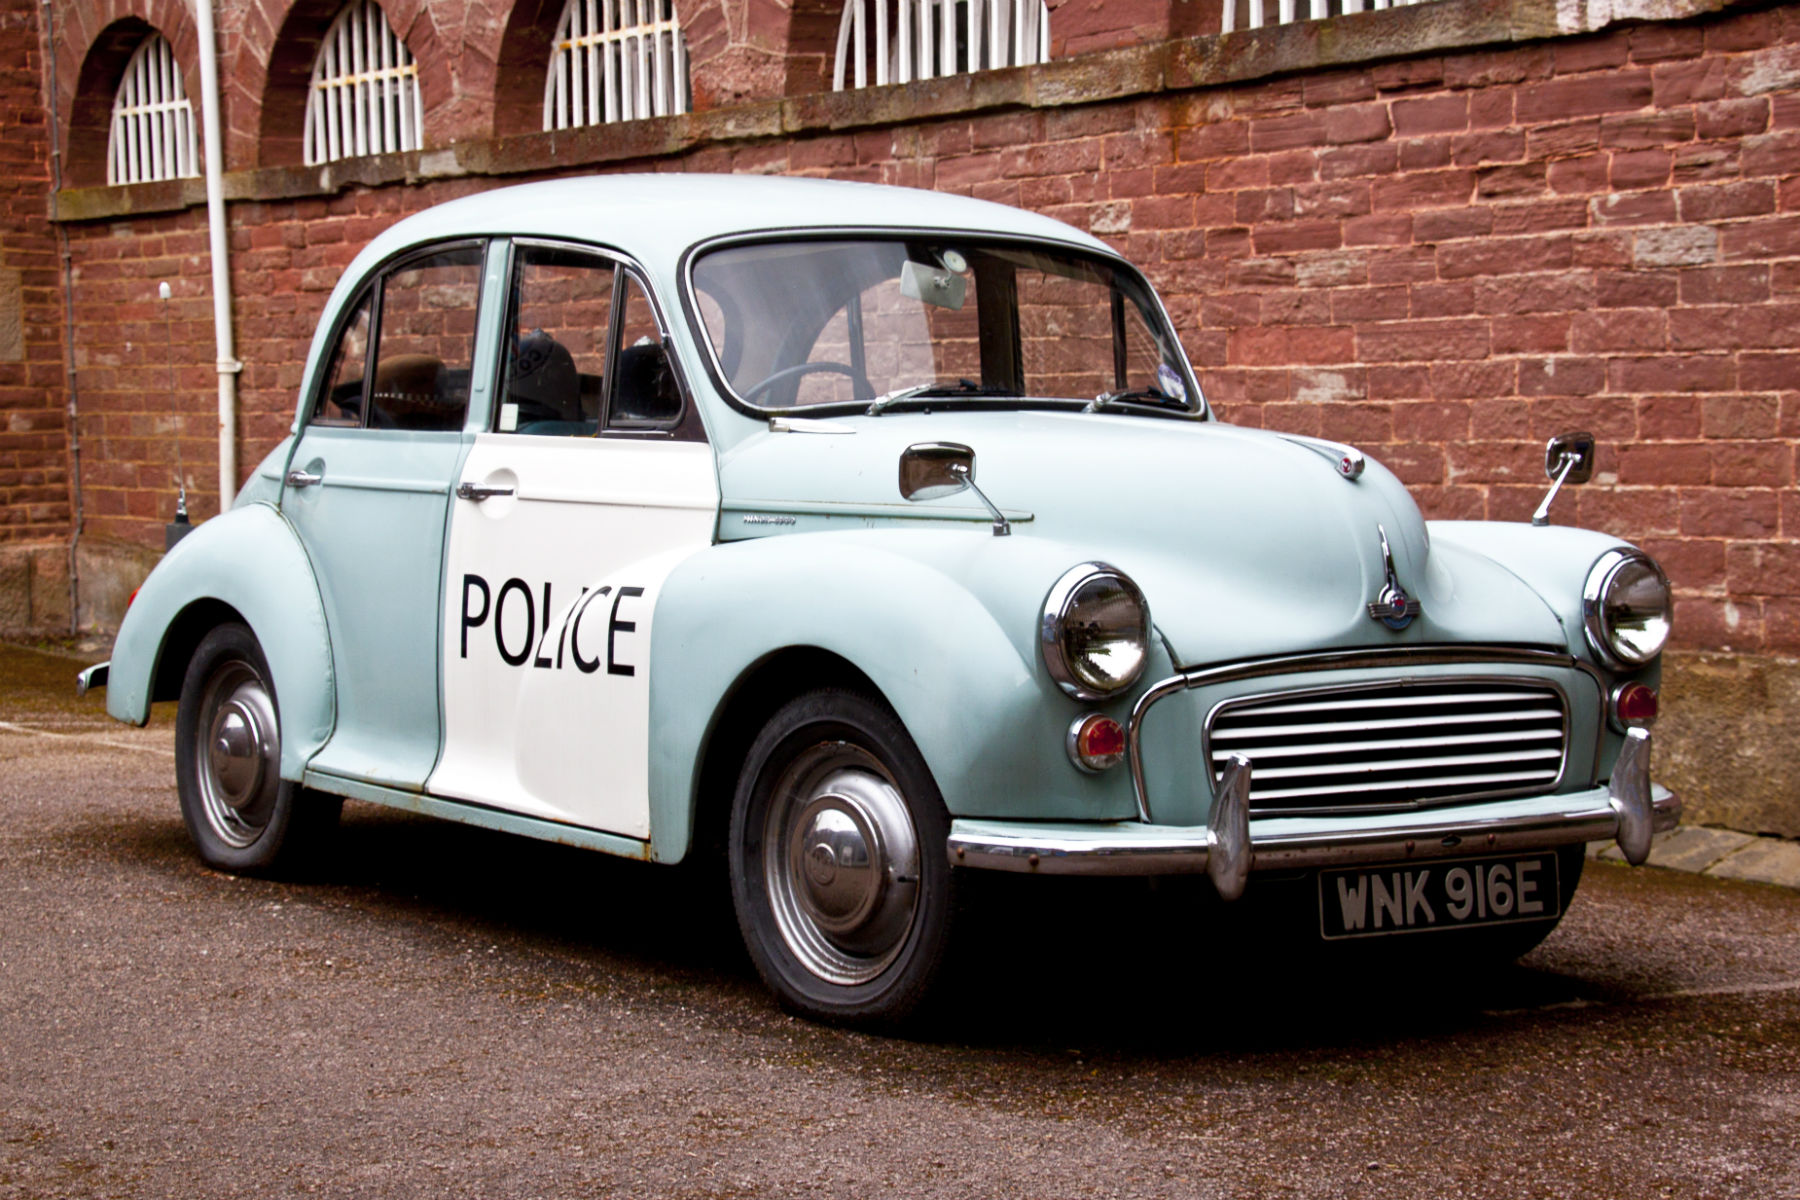 It's official: police in Scotland love a retro cop car